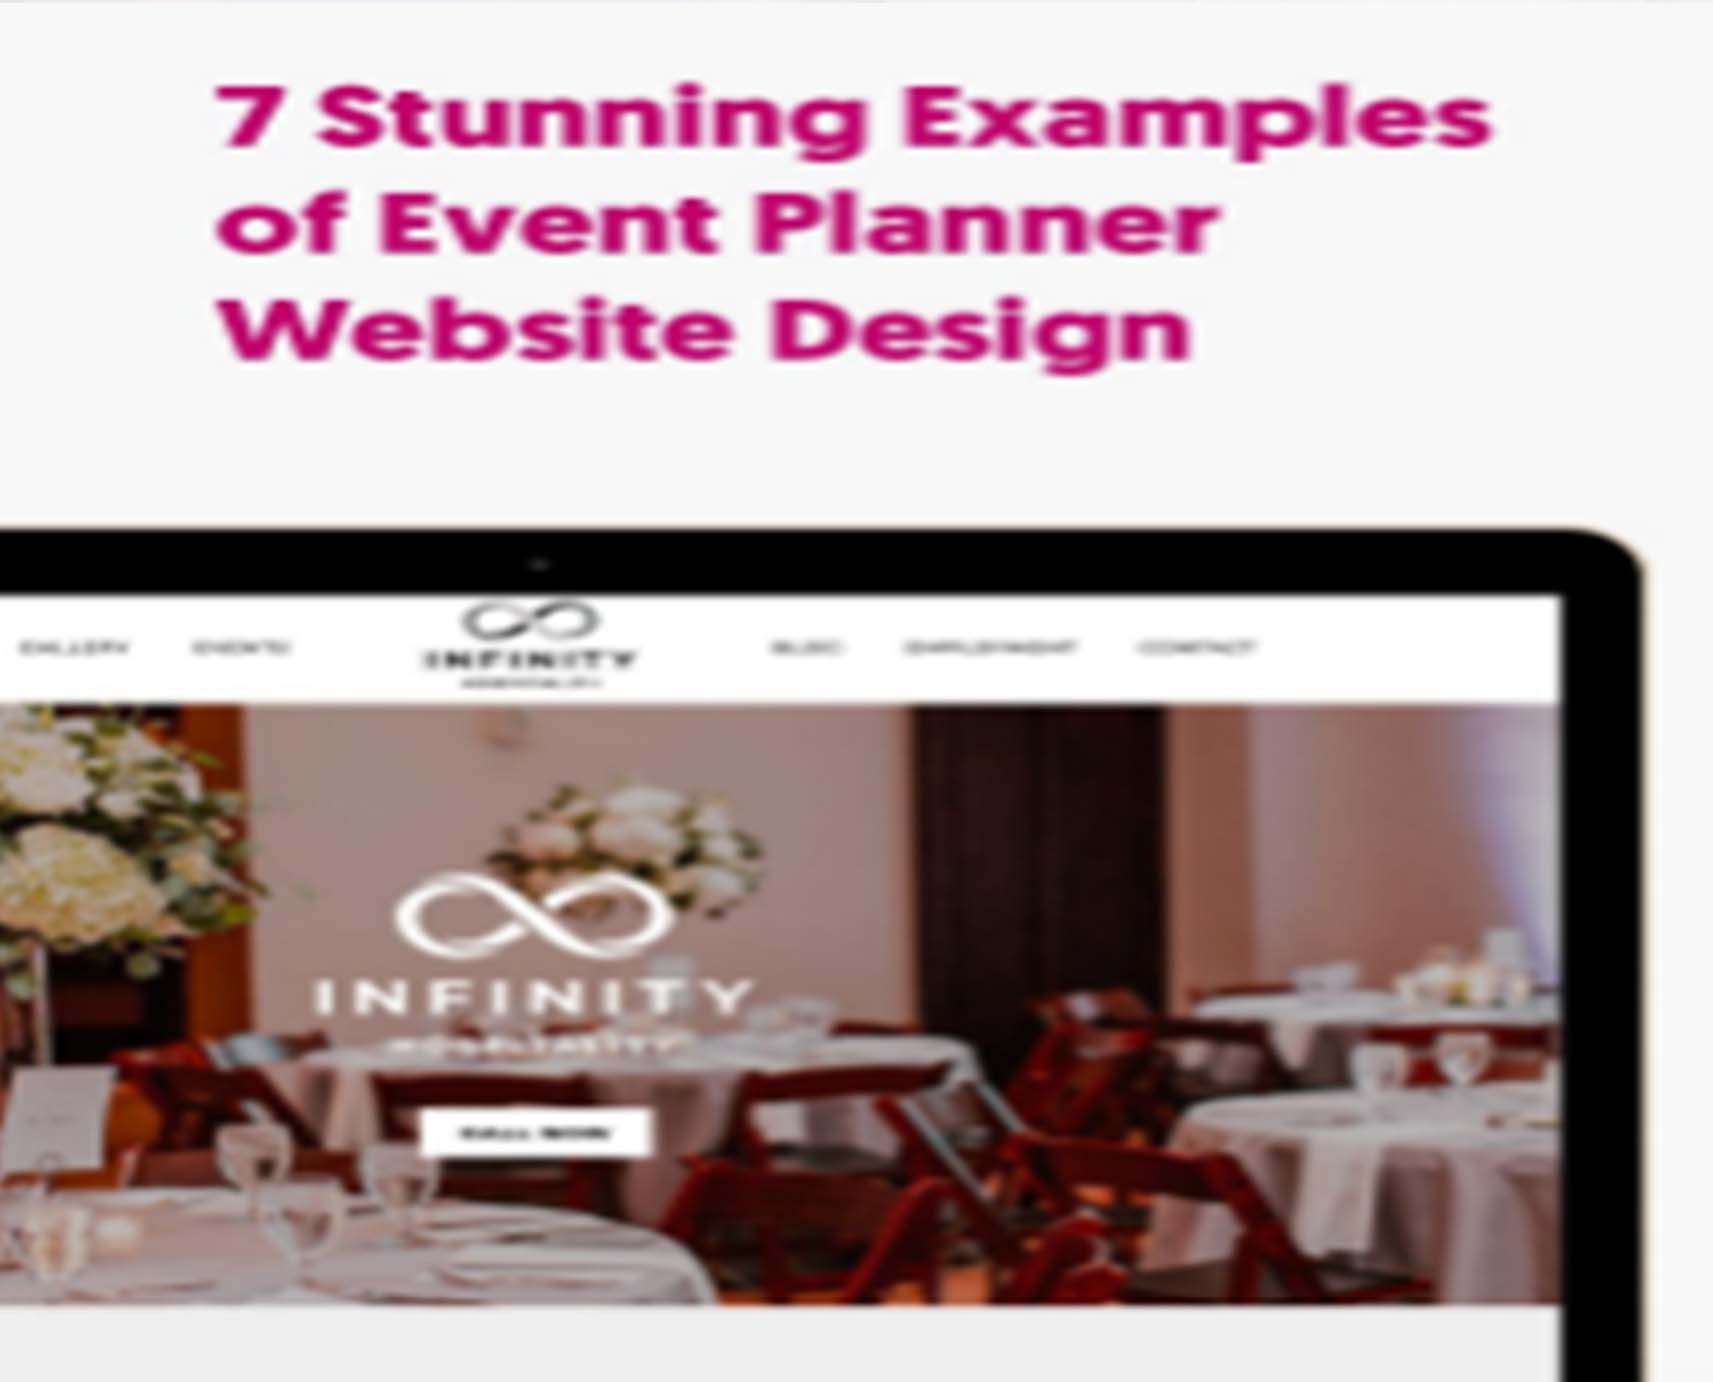 7 Stunning Examples of Event Planner Website Design